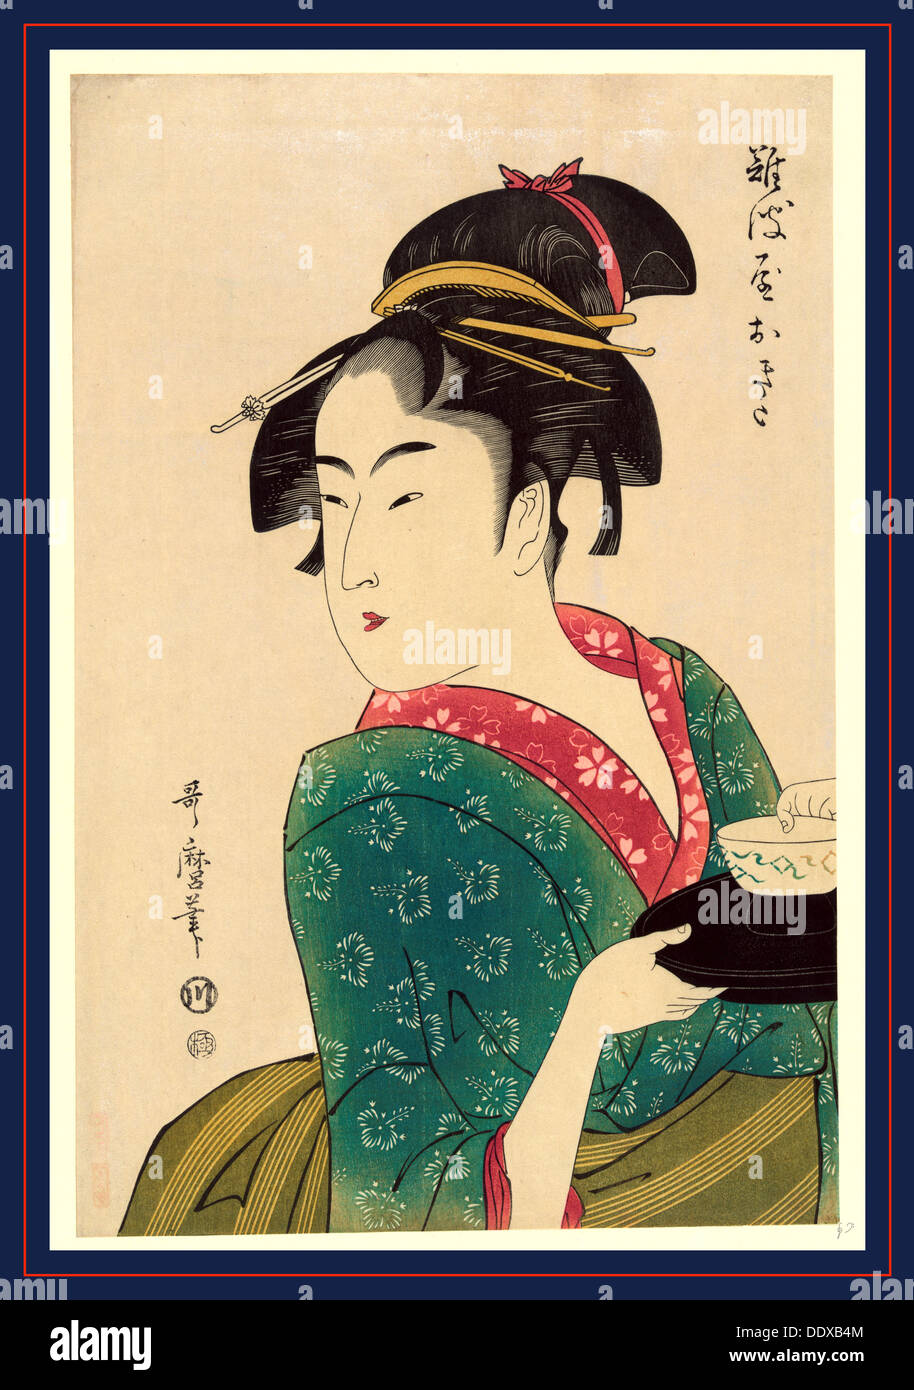 Naniwaya okita, Okita di Naniwa-ya. [1793, stampato in seguito], 1 stampa : xilografia, colore., stampa mostra Naniwaya Okita Foto Stock